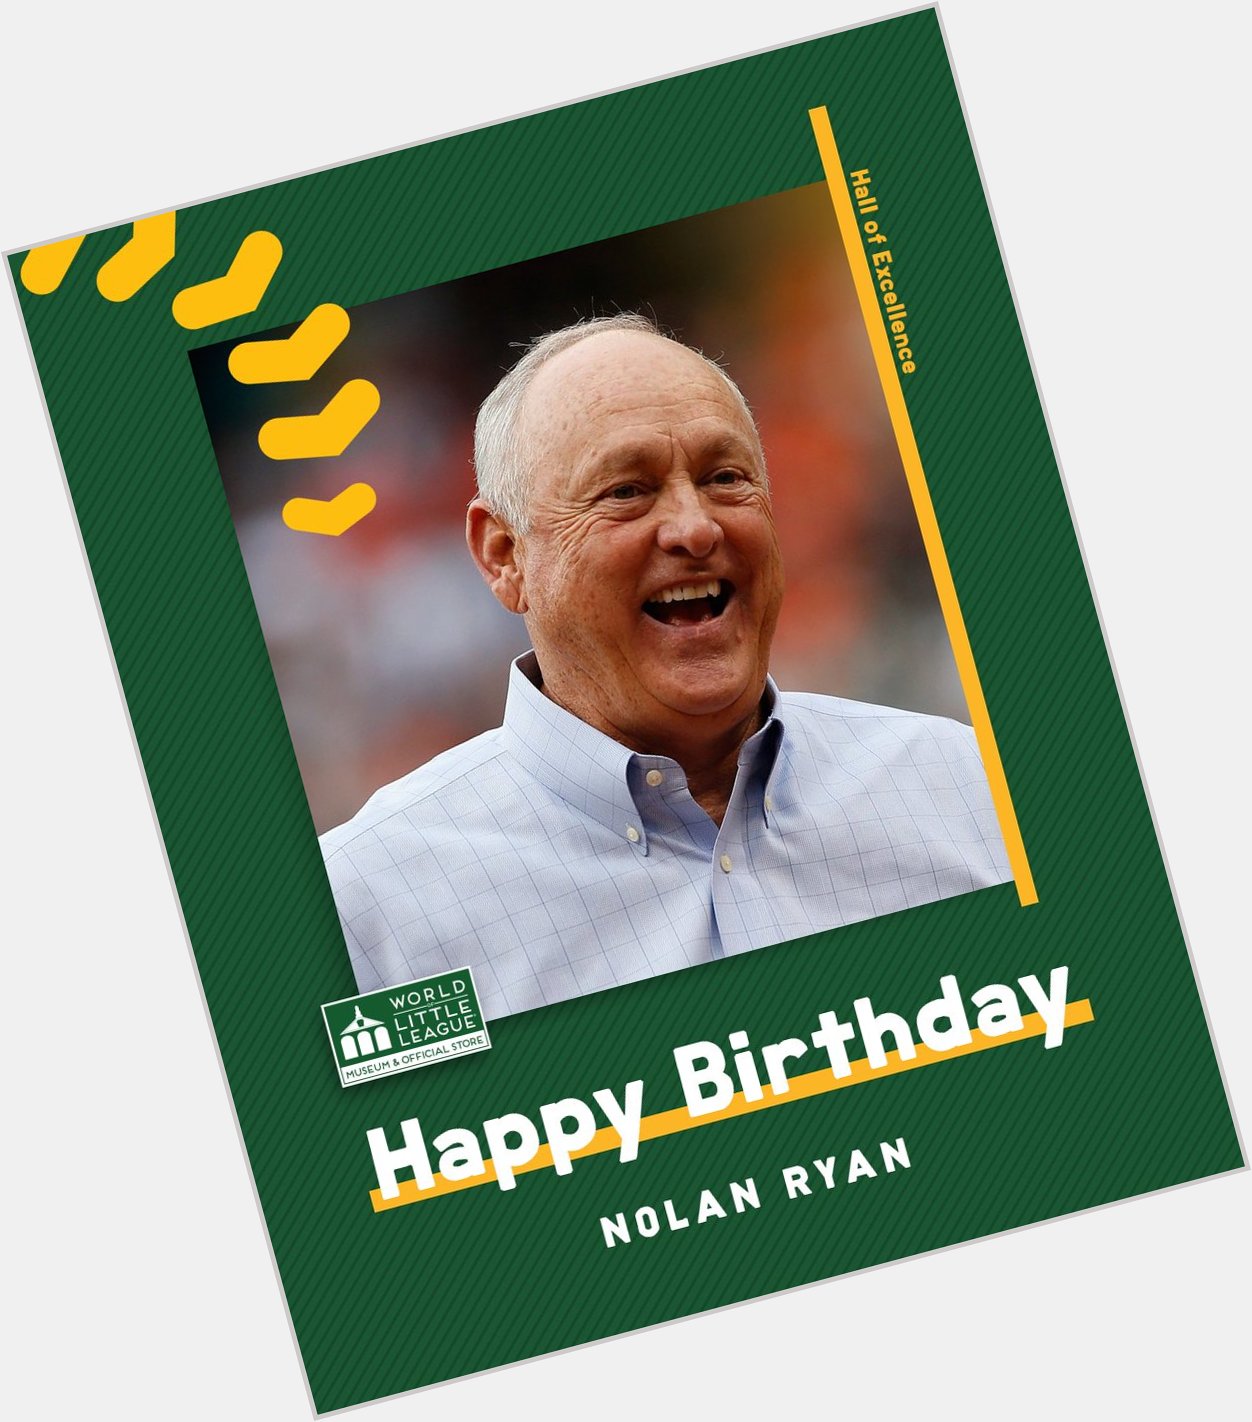 Wishing a happy 76th birthday to Nolan Ryan! 